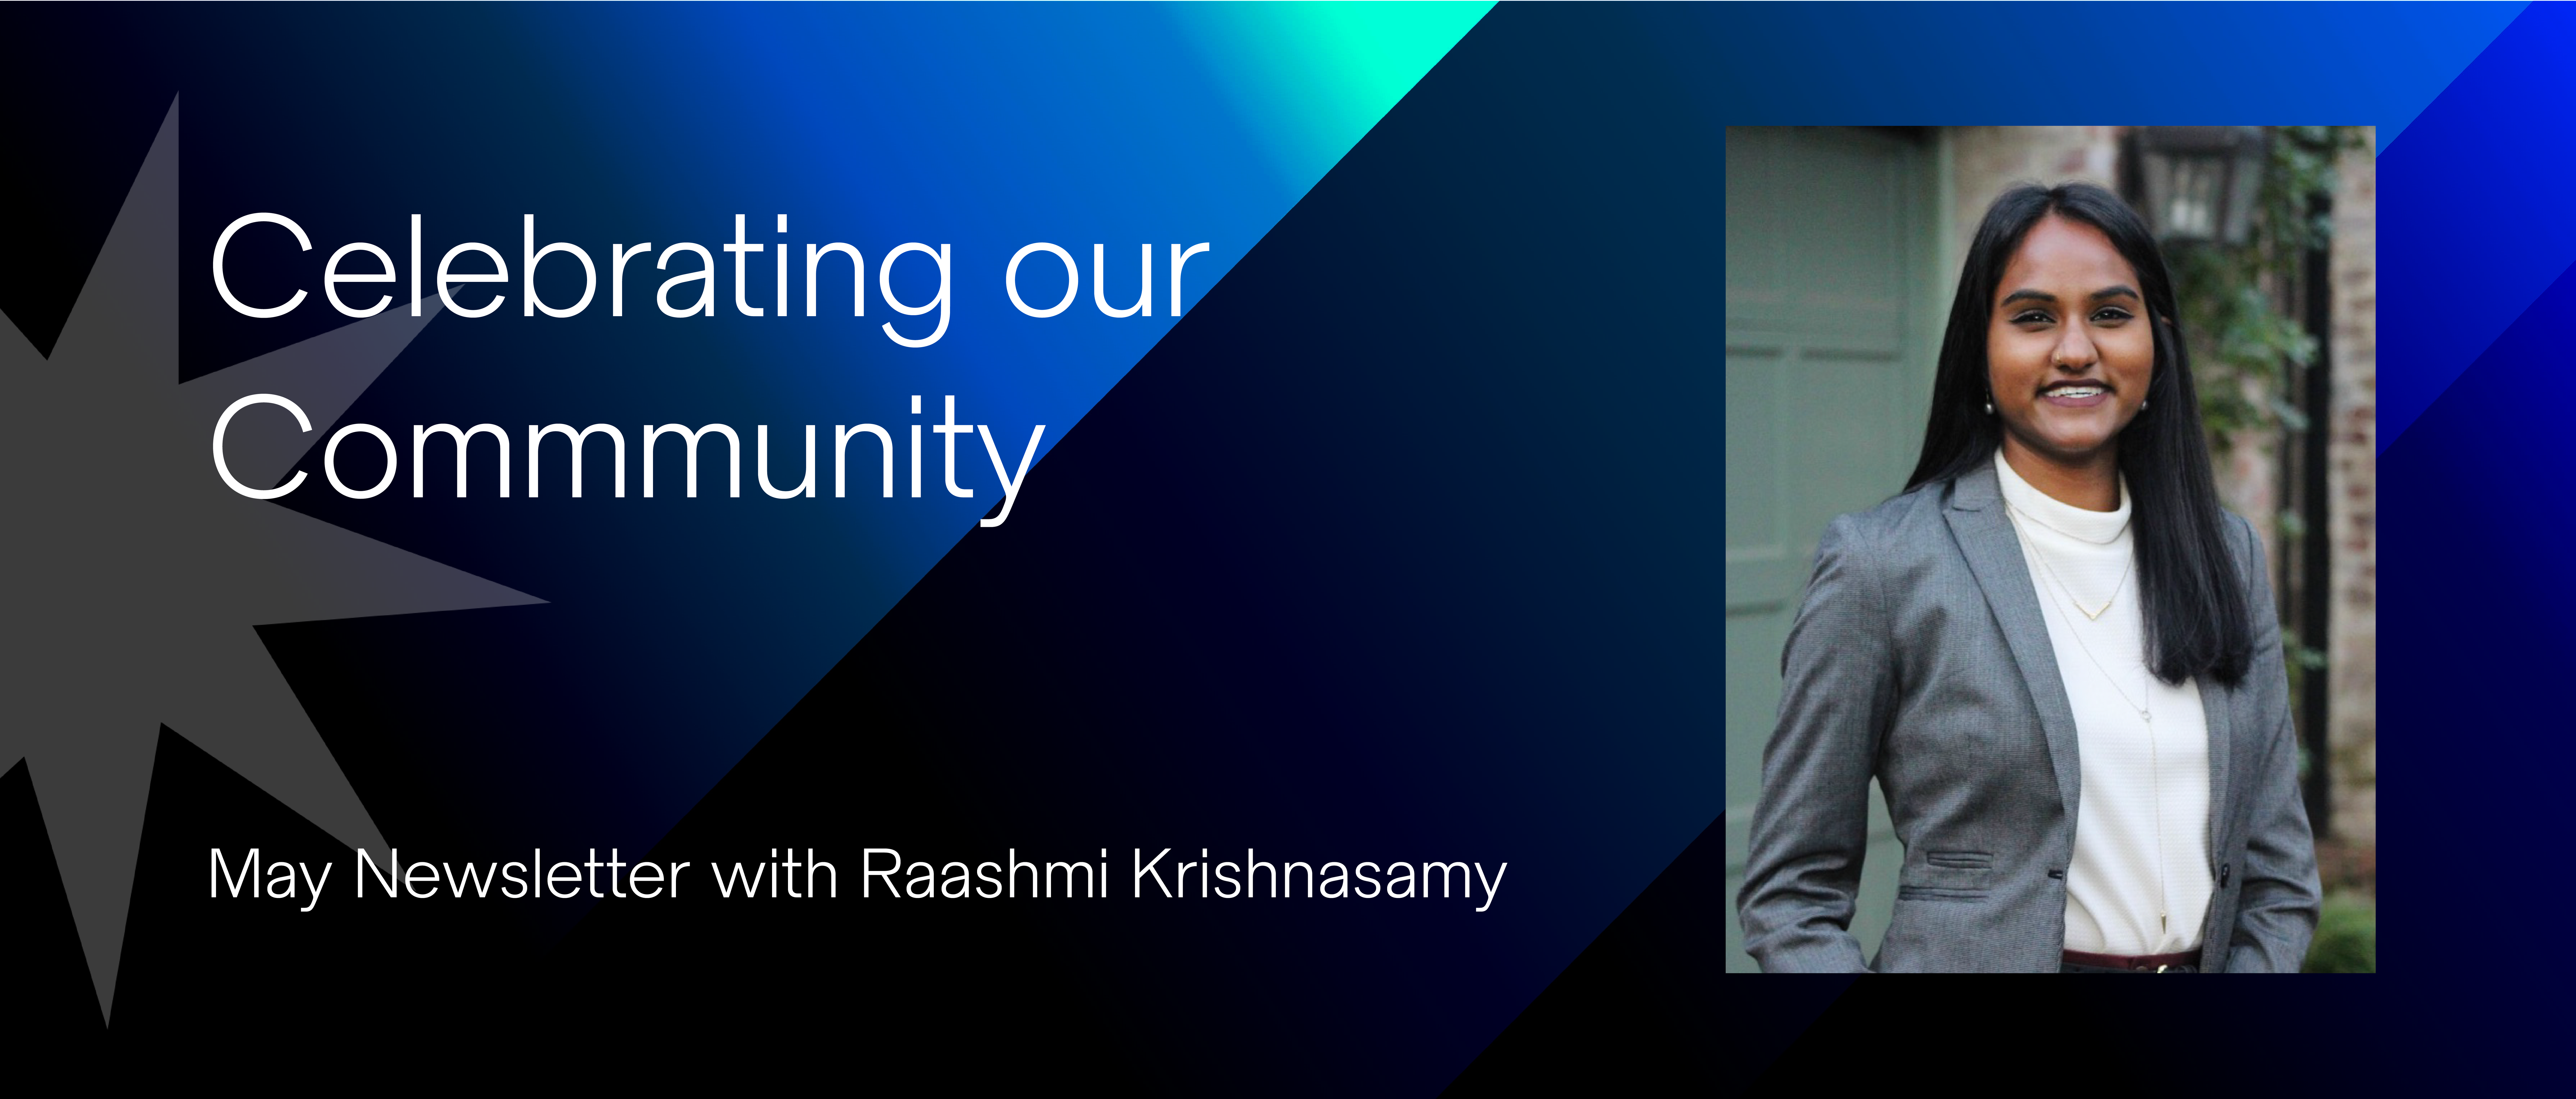 Celebrating our Community. May newsletter with Raashmi Krishnasamy